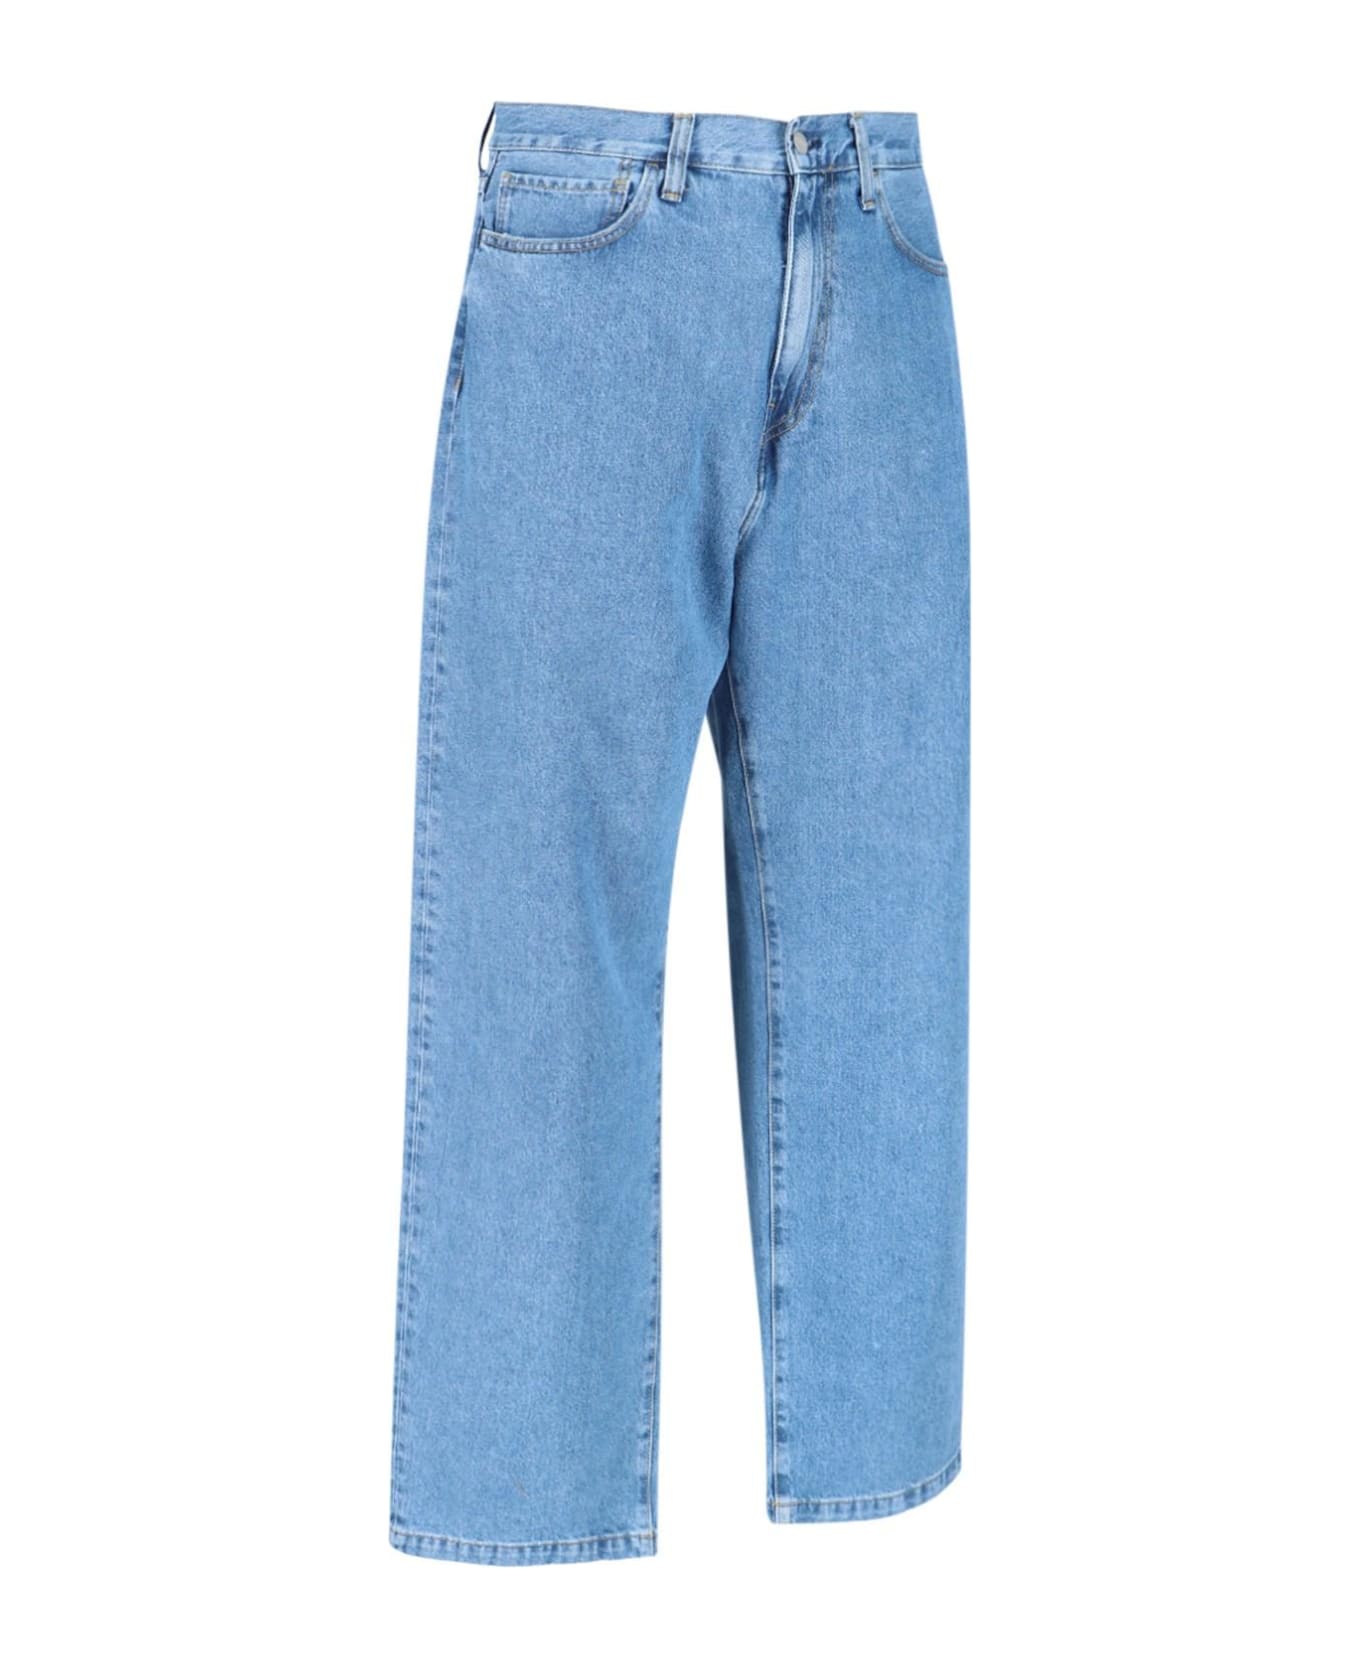 Carhartt Landon Jeans - Blue